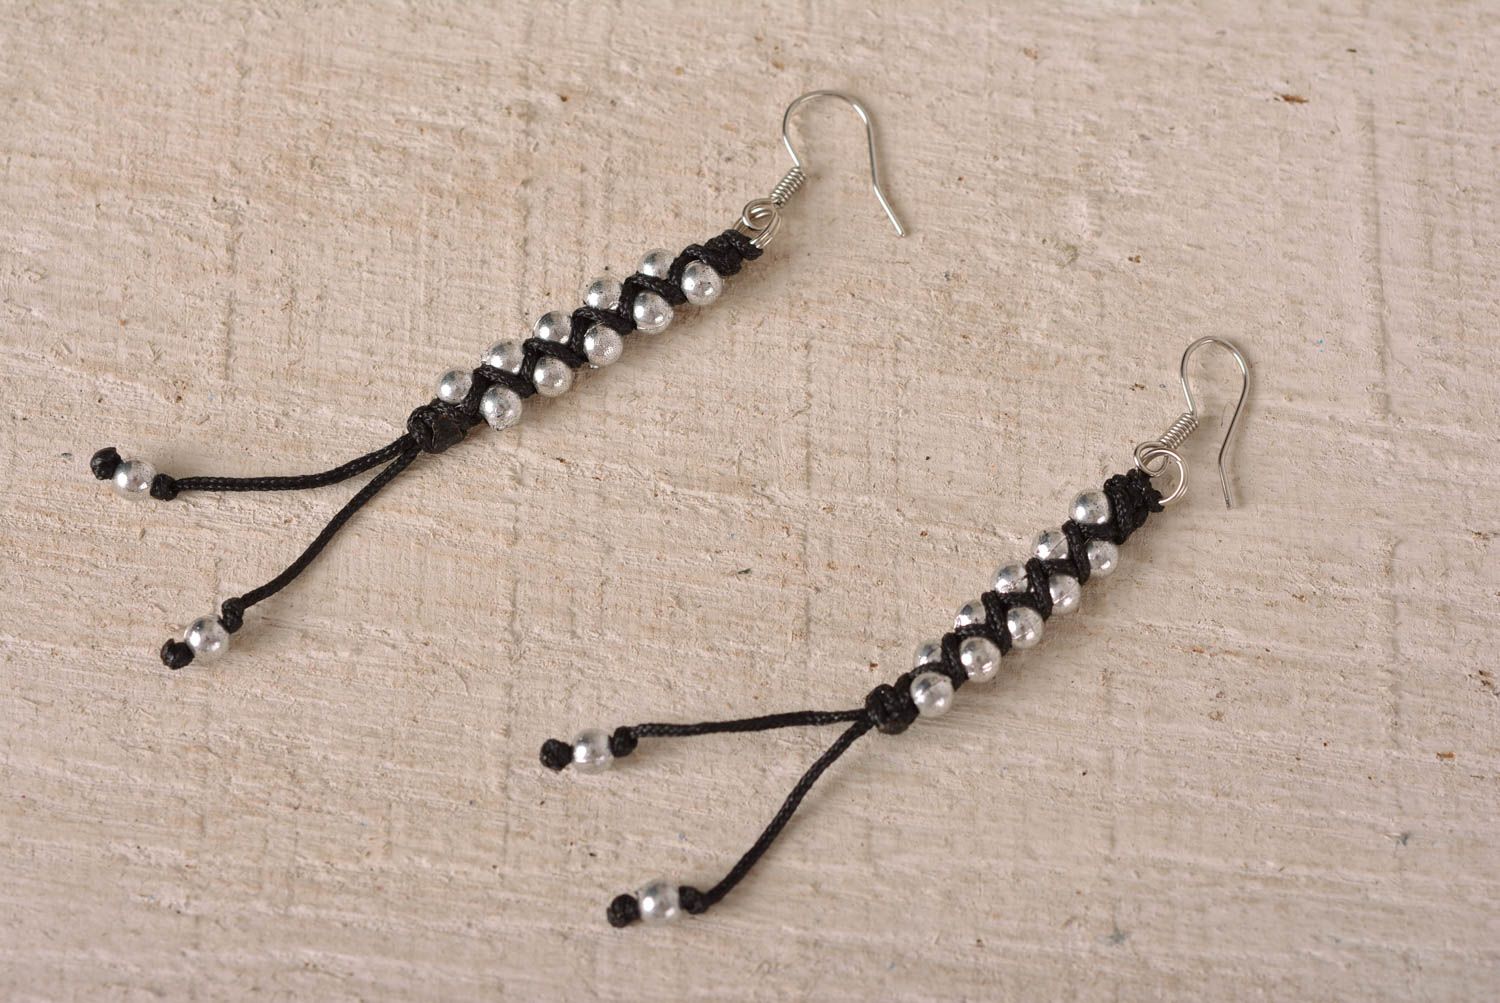 Long earrings handmade earrings with beads macrame earrings macrame jewelry photo 1